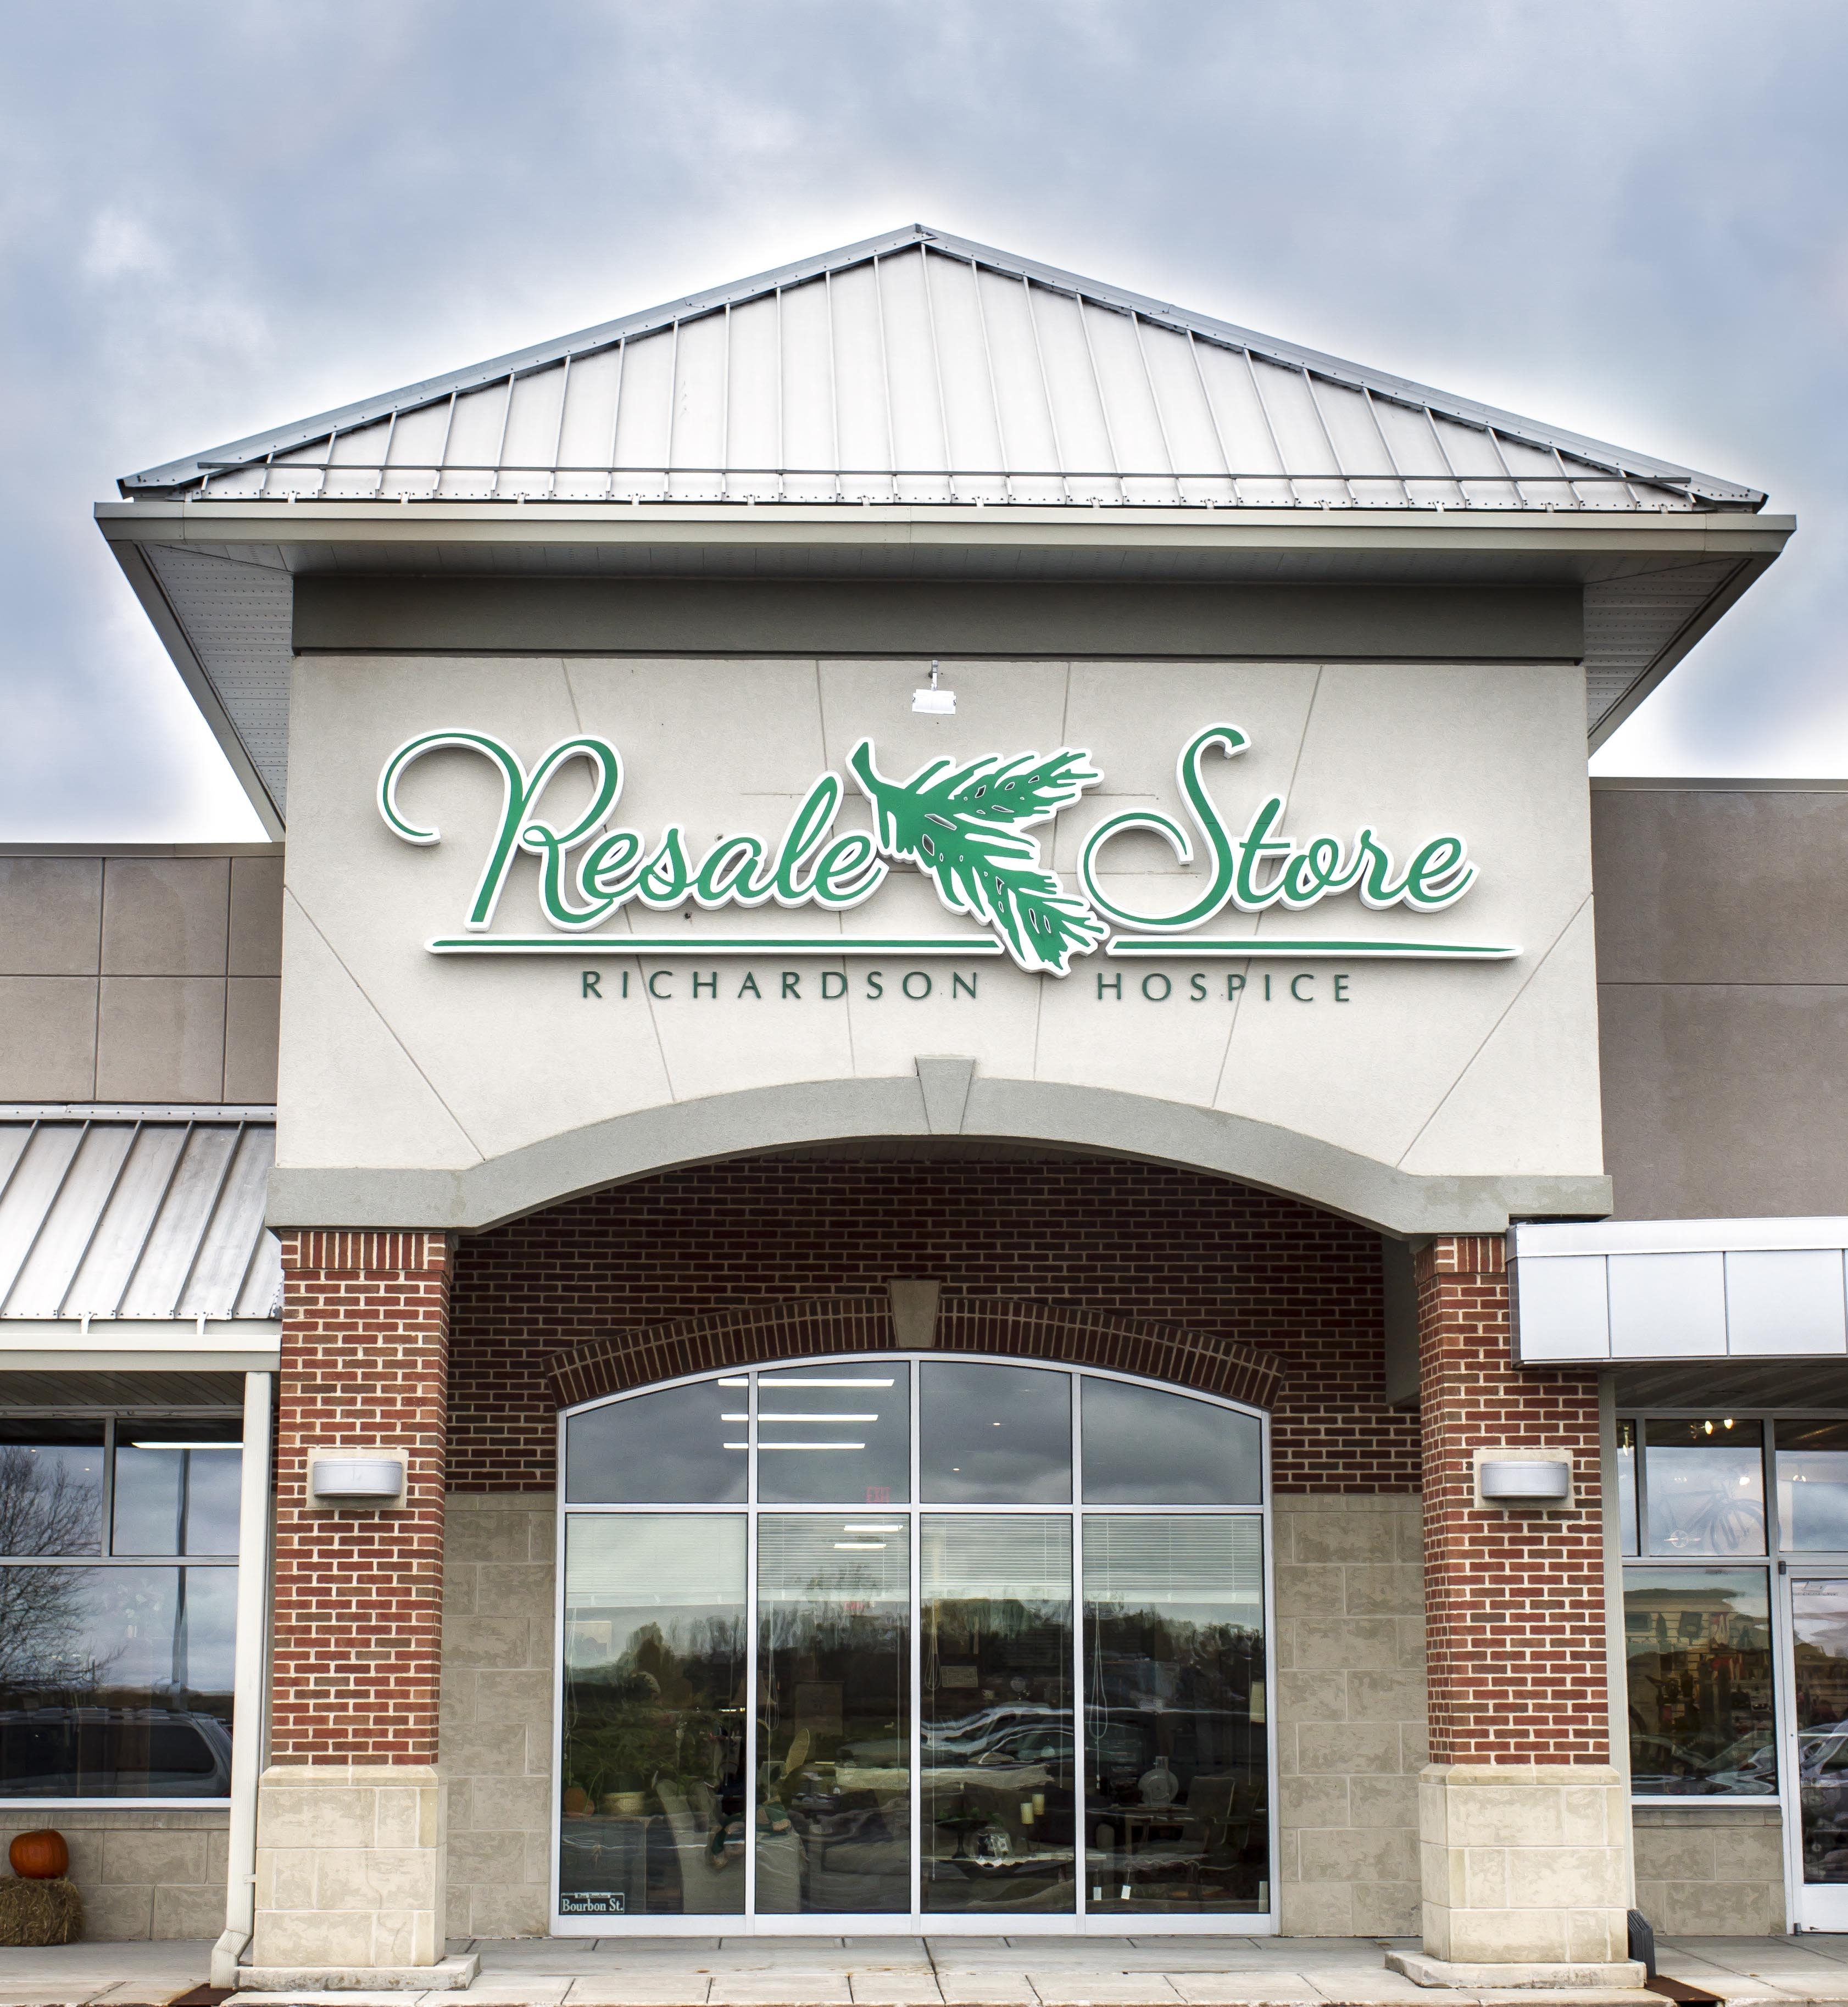 Sharon S. Richardson Community Hospice Resale Store storefront